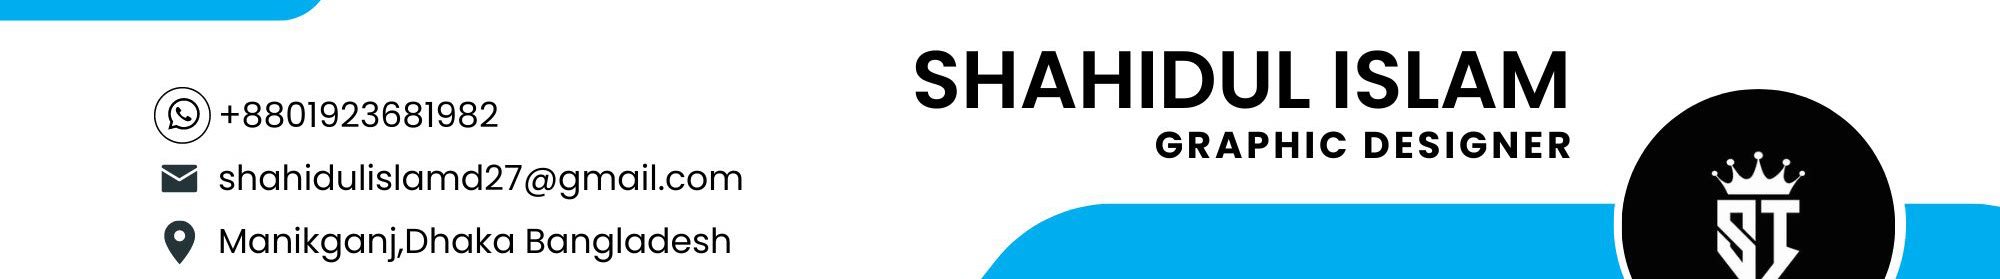 Shahidul Islam's profile banner